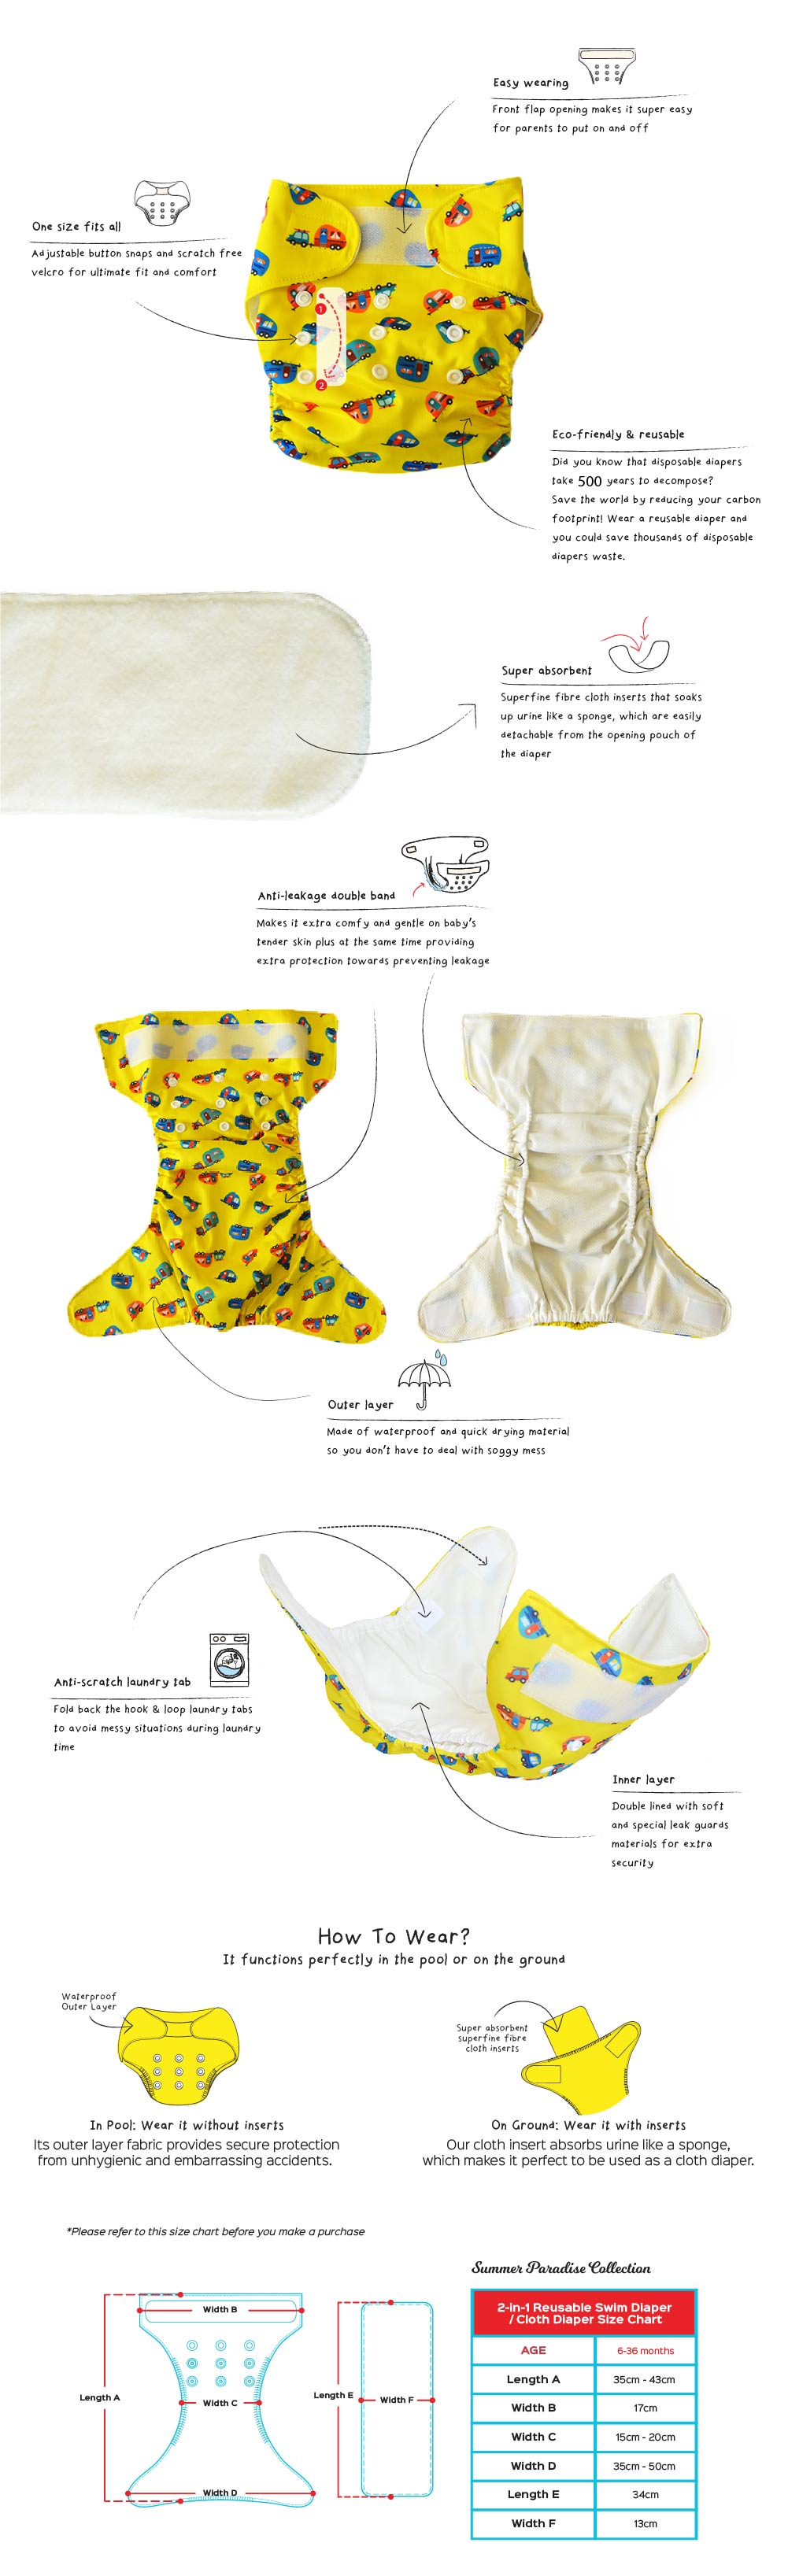 Cheekaaboo 2-in-1 Reusable Swim Diaper / Cloth Diaper - Pineapple (6-36 months) - Summer Paradise